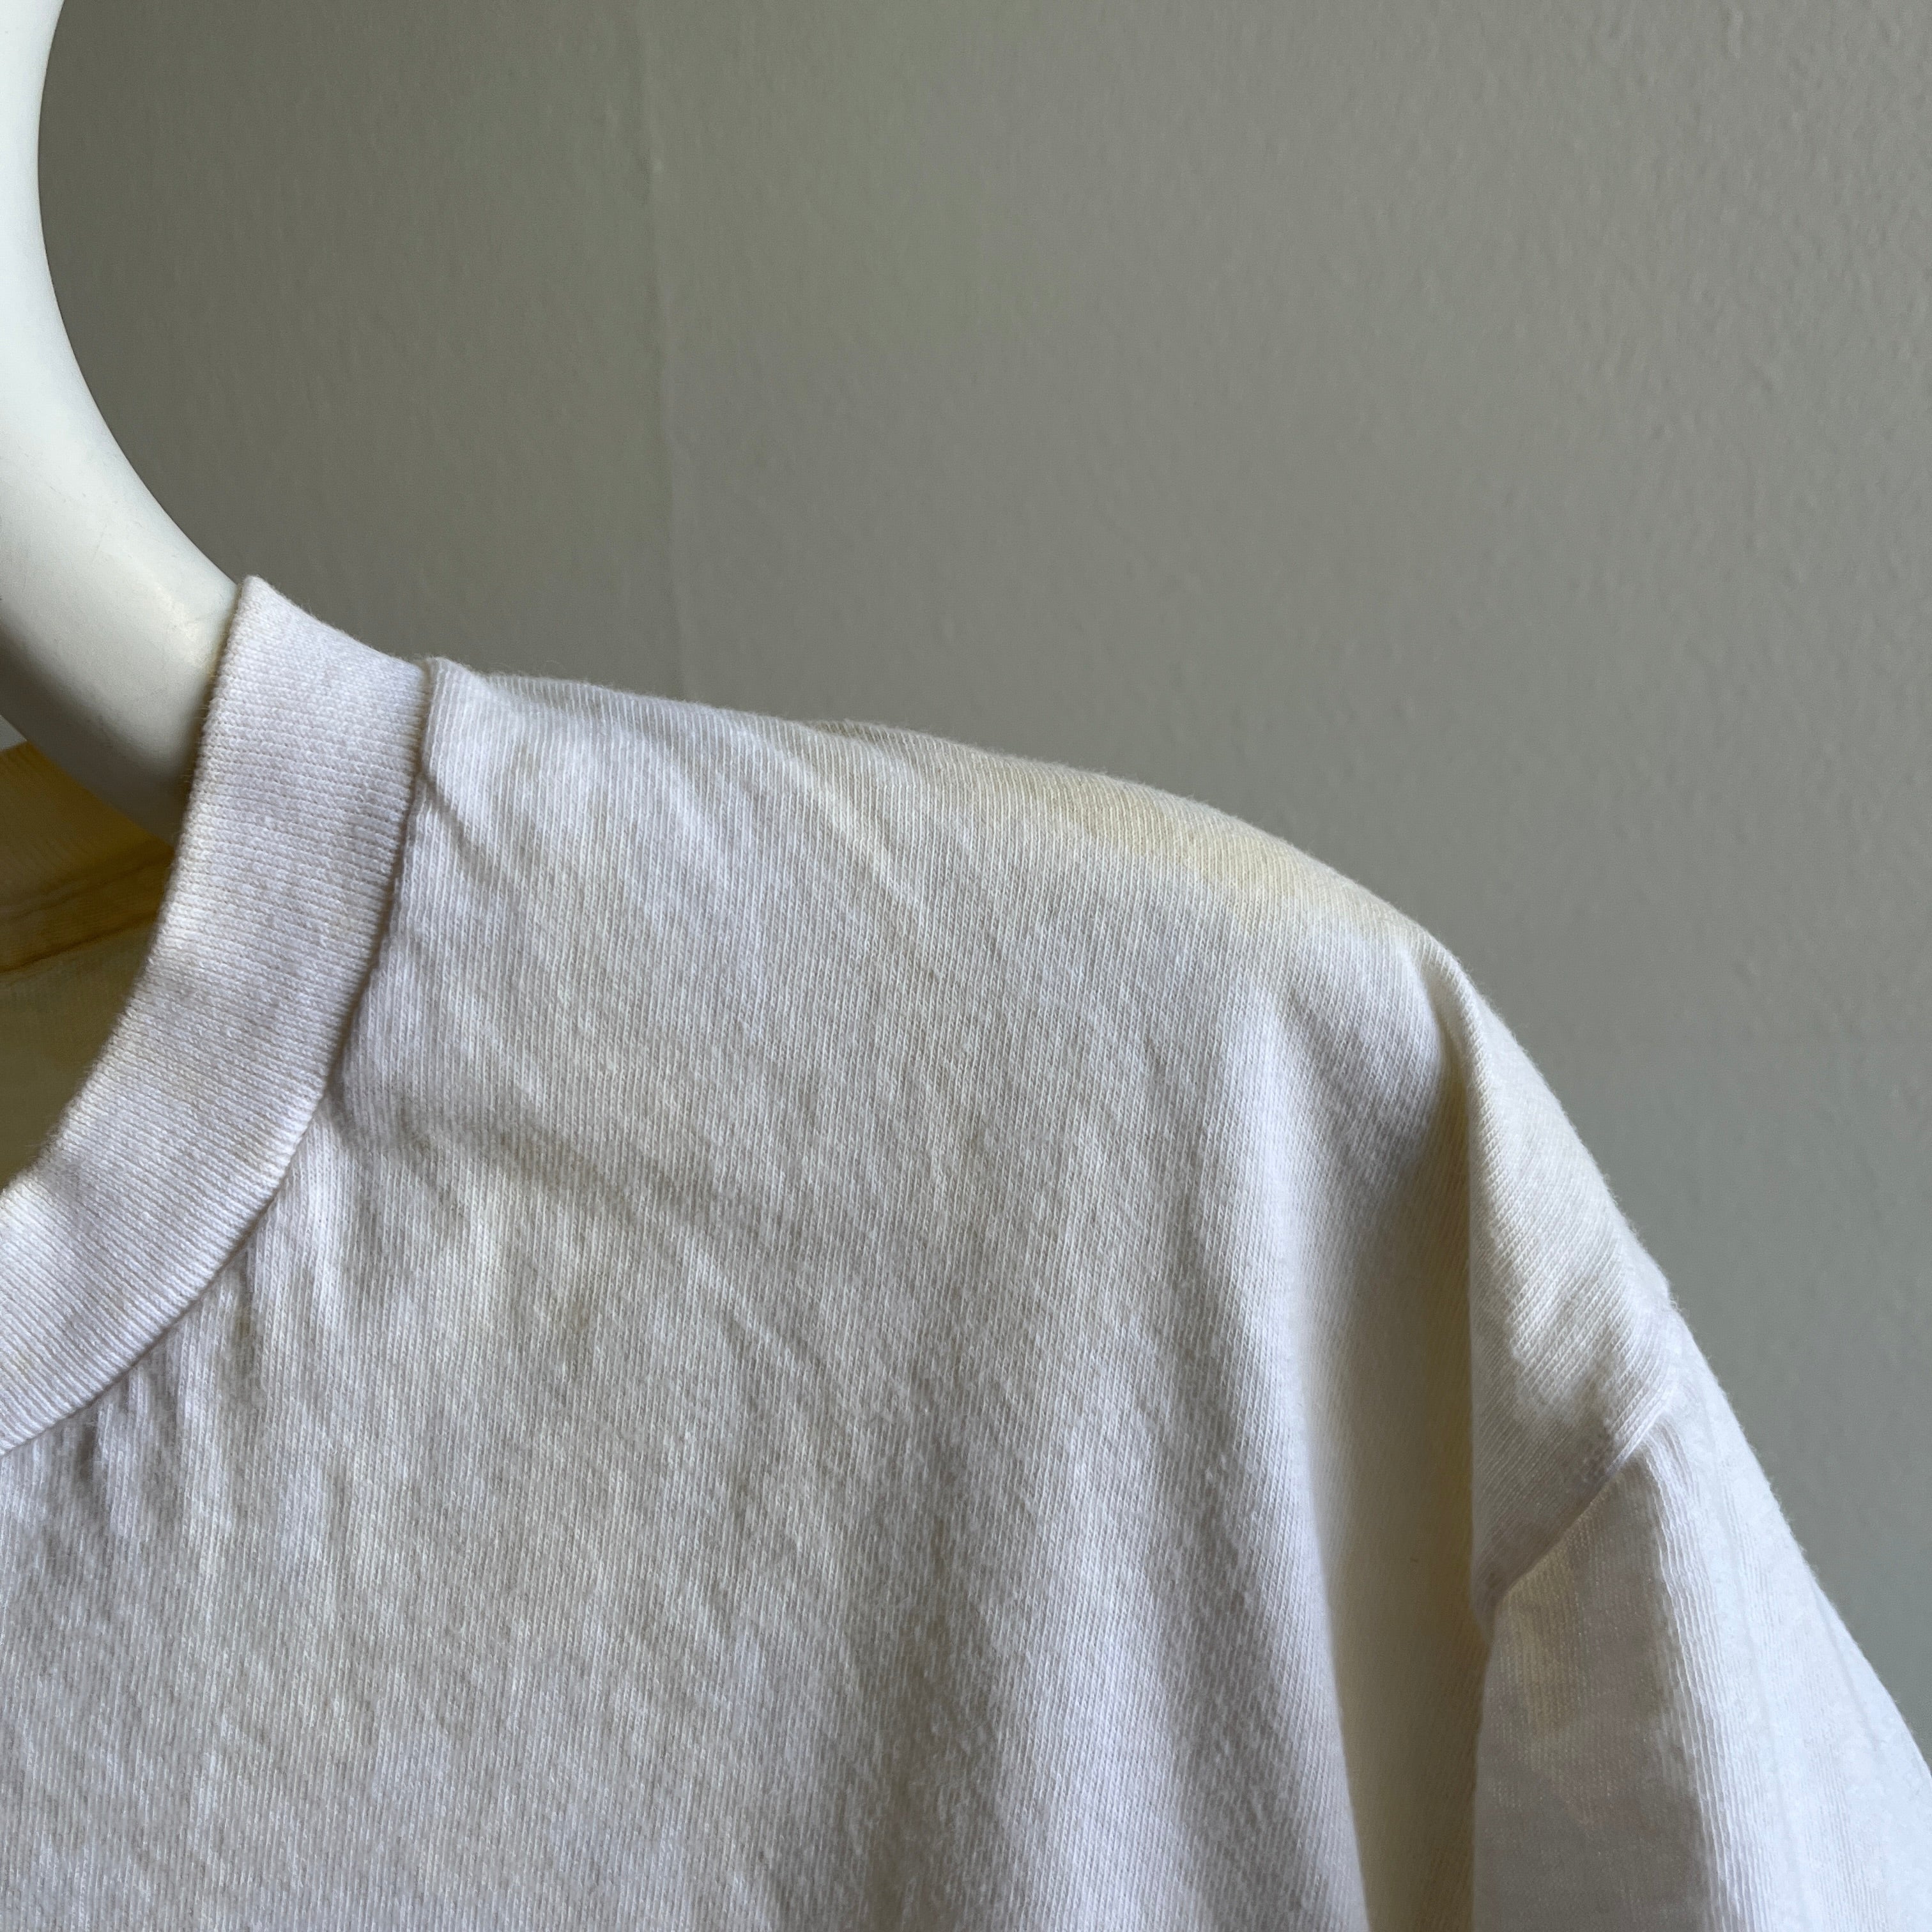 GG 1990s JC Penny Blank White/Ecru T-Shirt